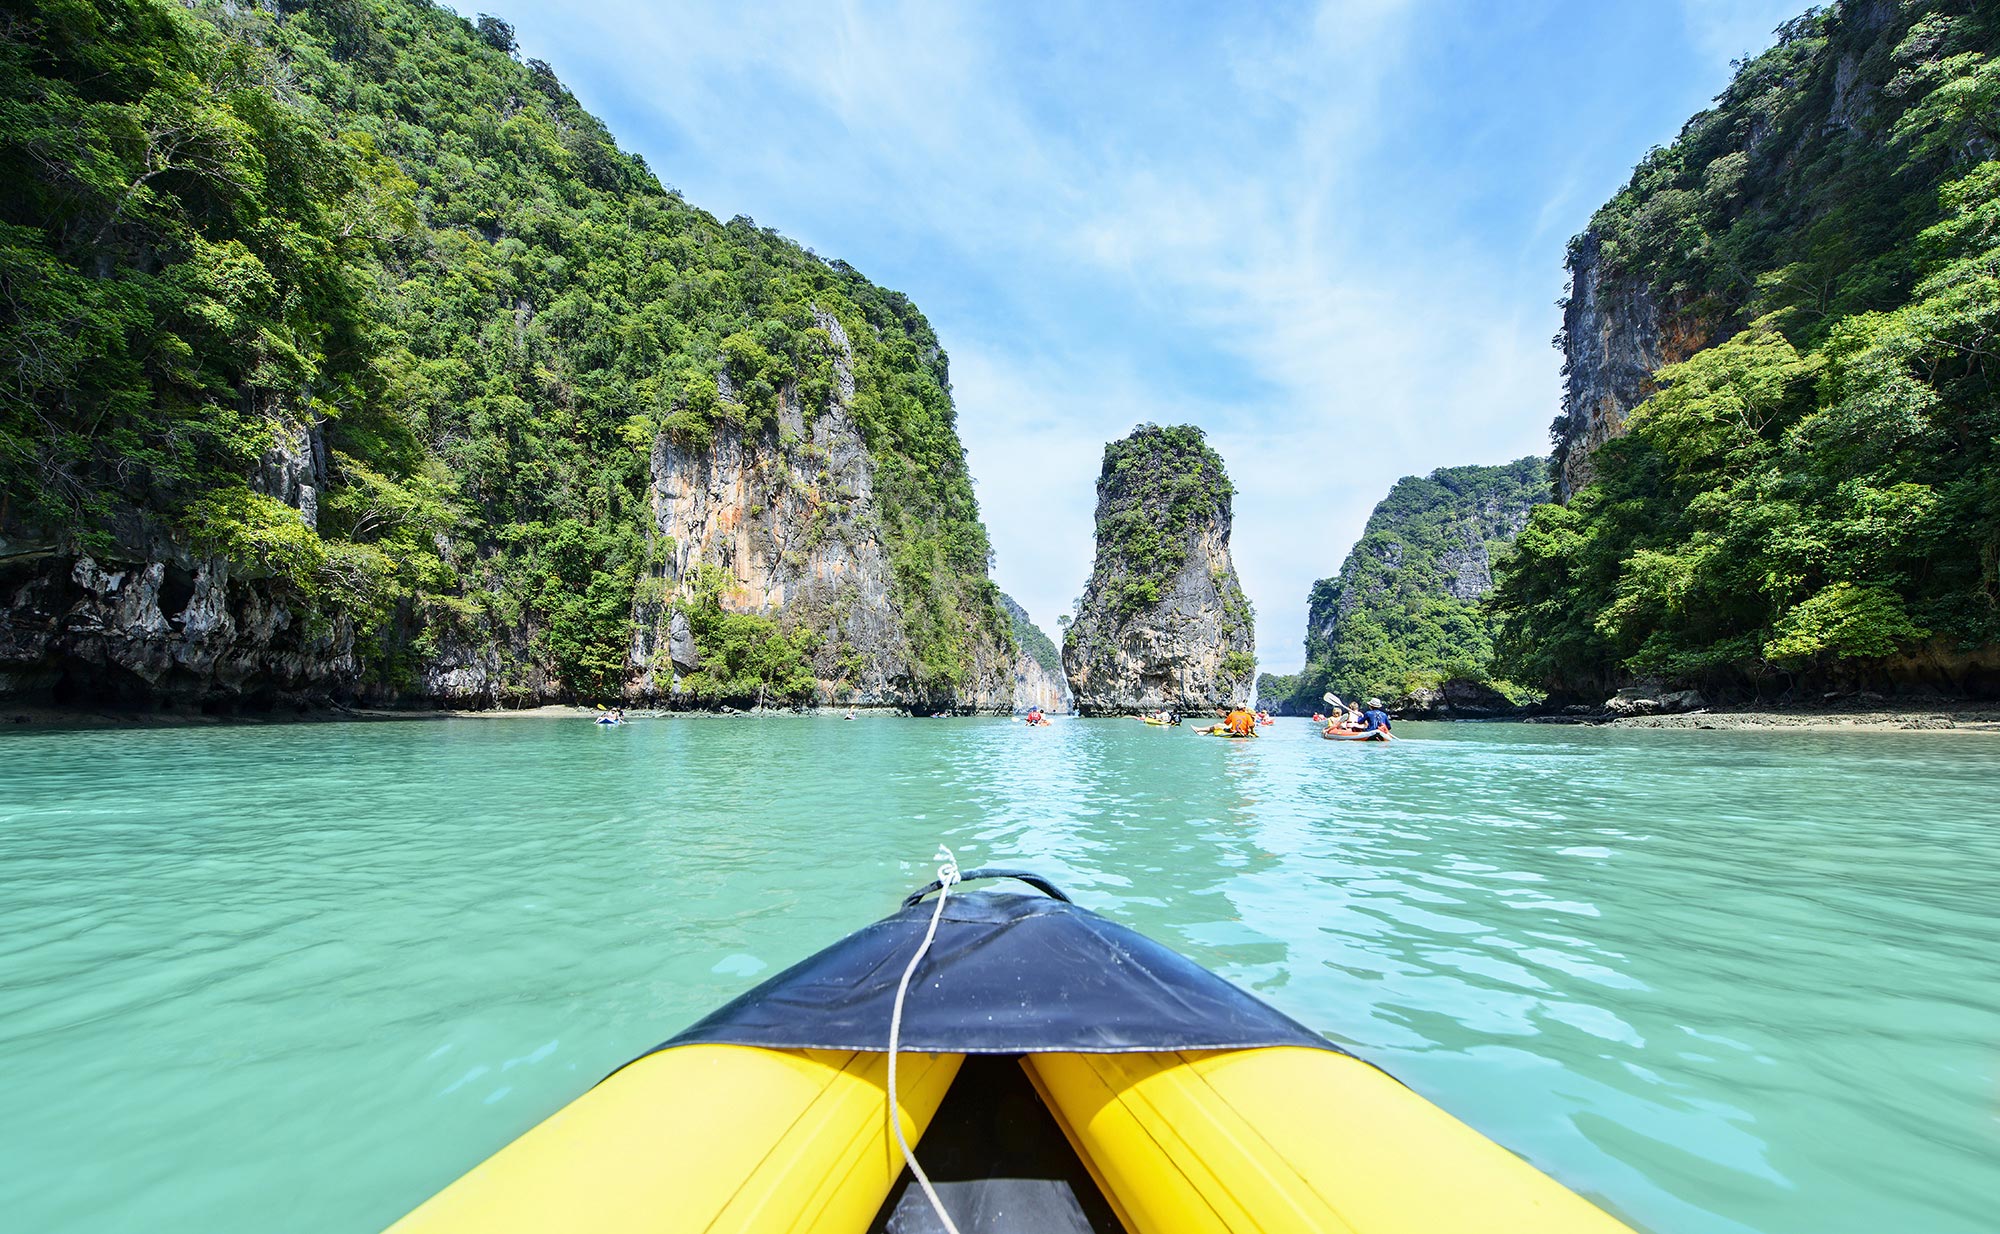 Ao Phang Nga National Park. Located near Phuket in Thailand. Famous landmark and famous travel destination. - Shutterstock